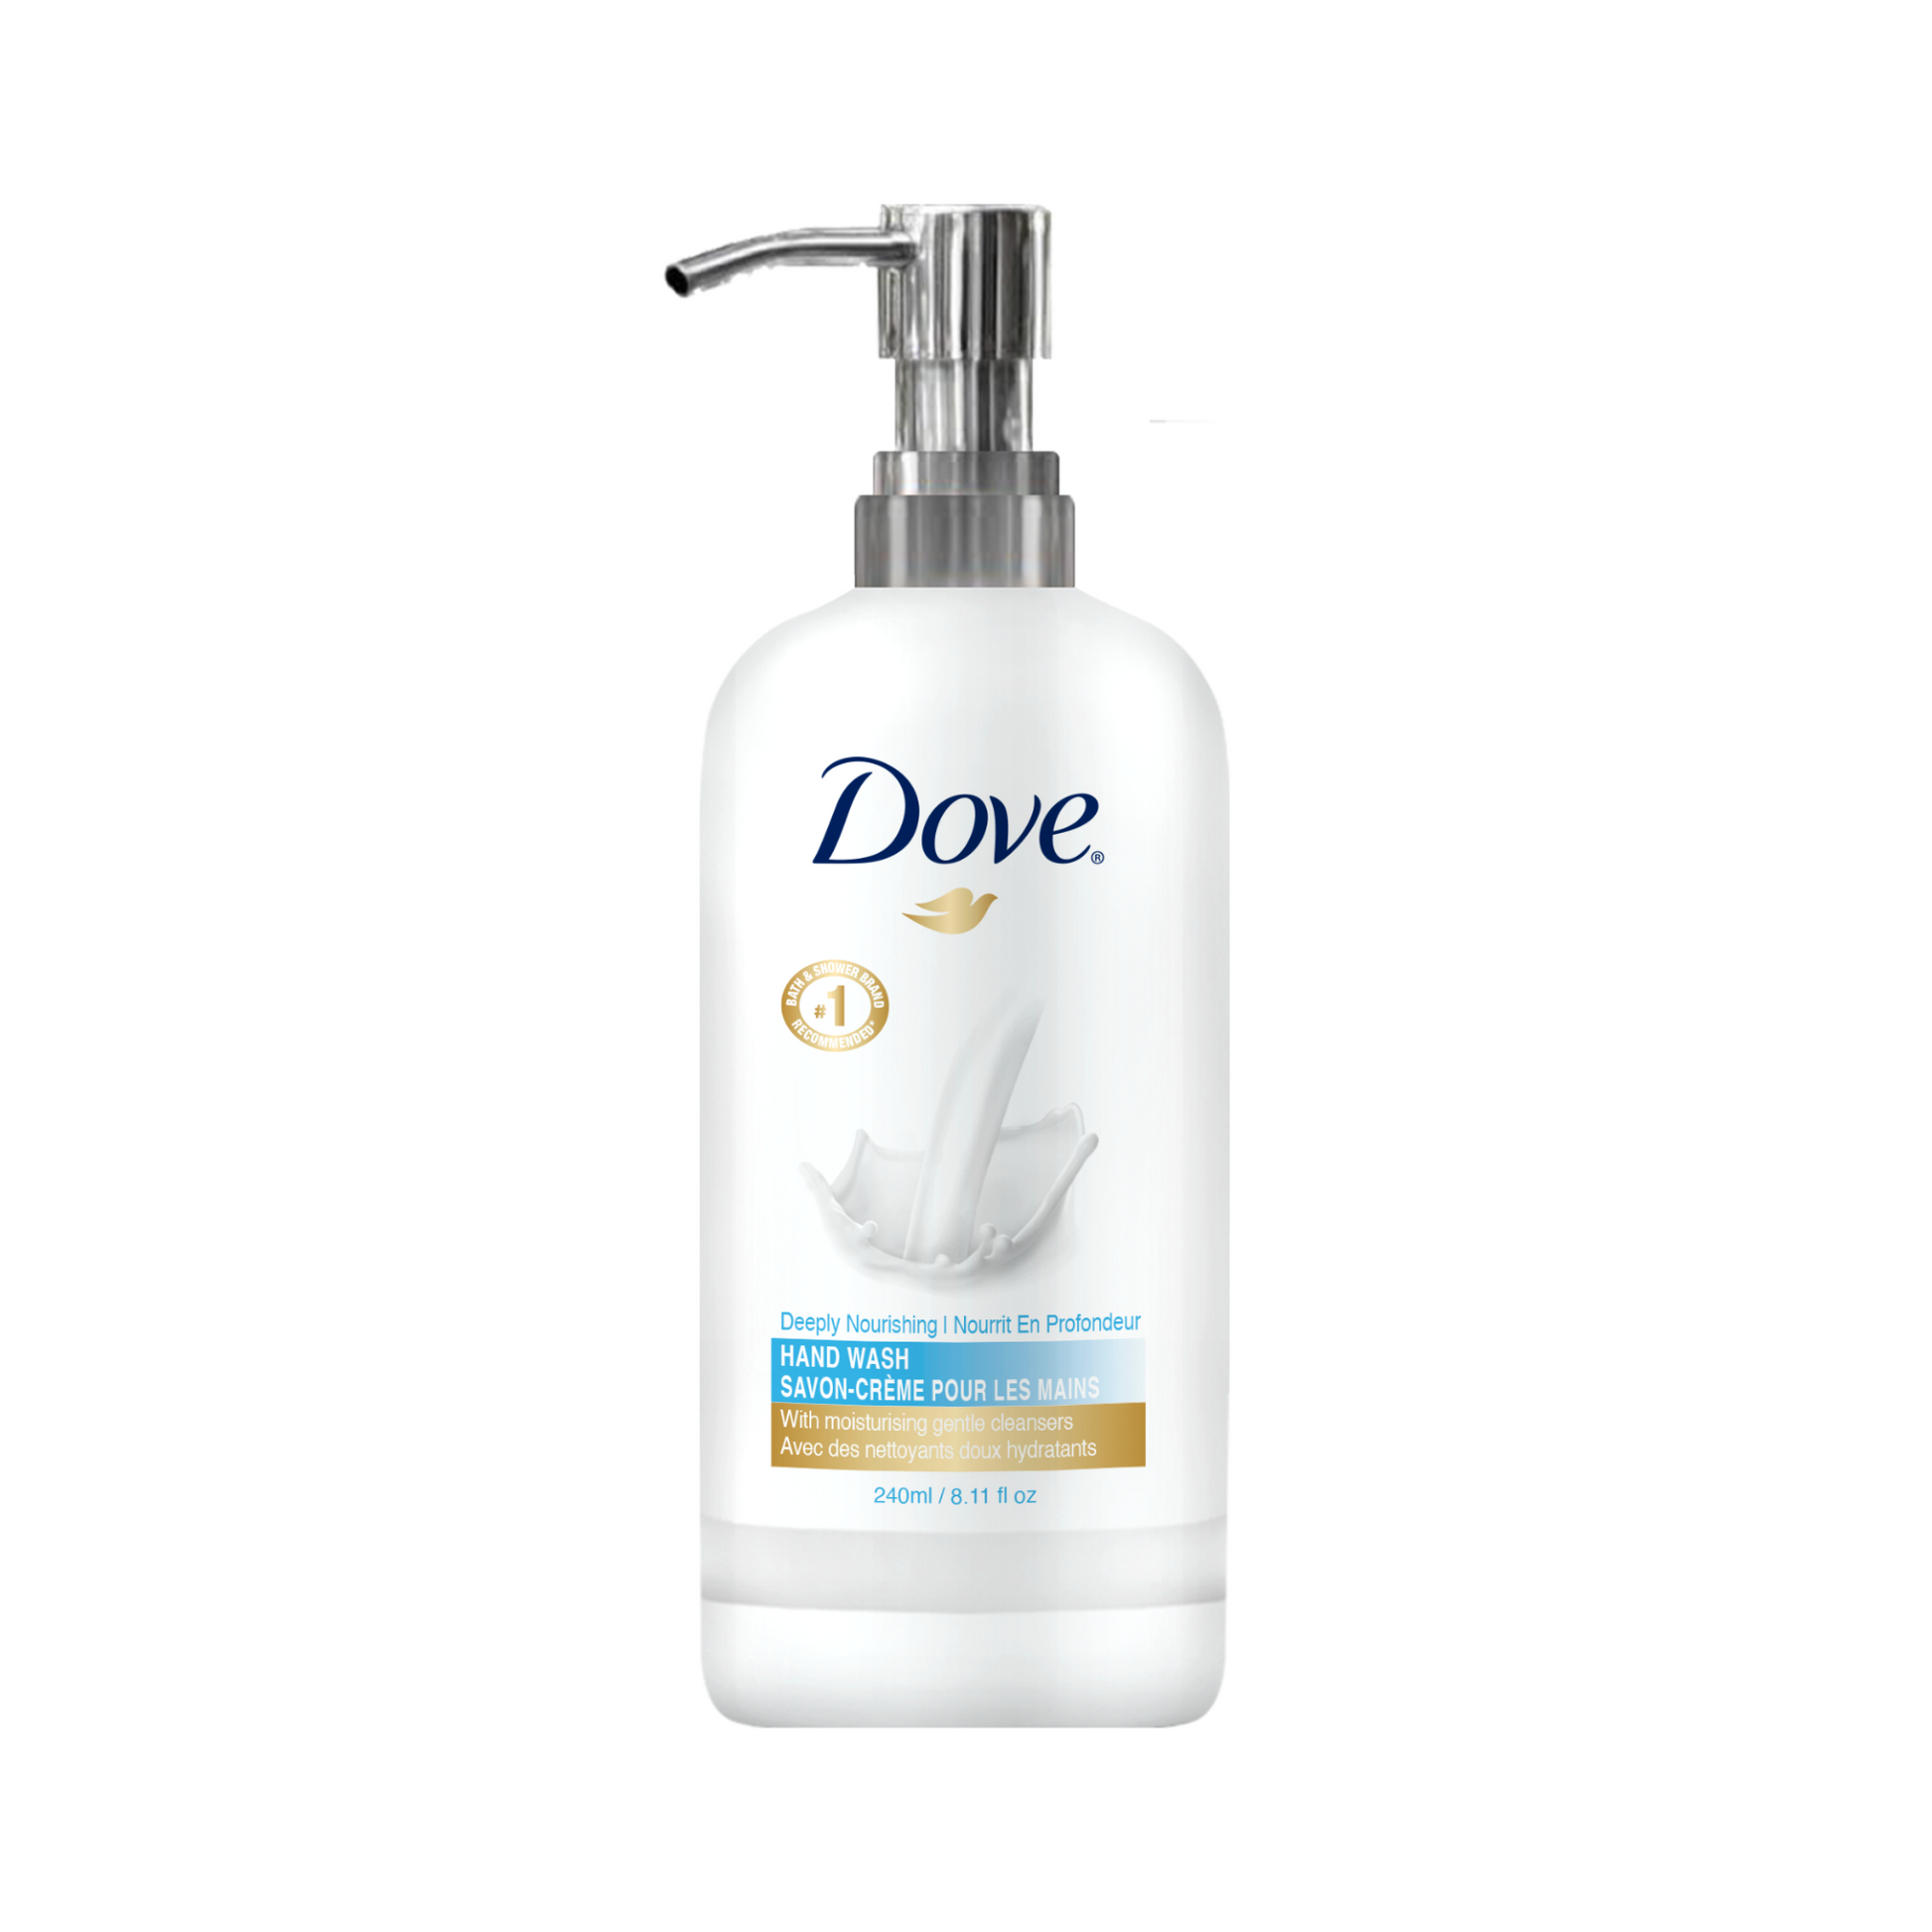 Dove Deeply Nourishing Hand Wash bottle - 240ml